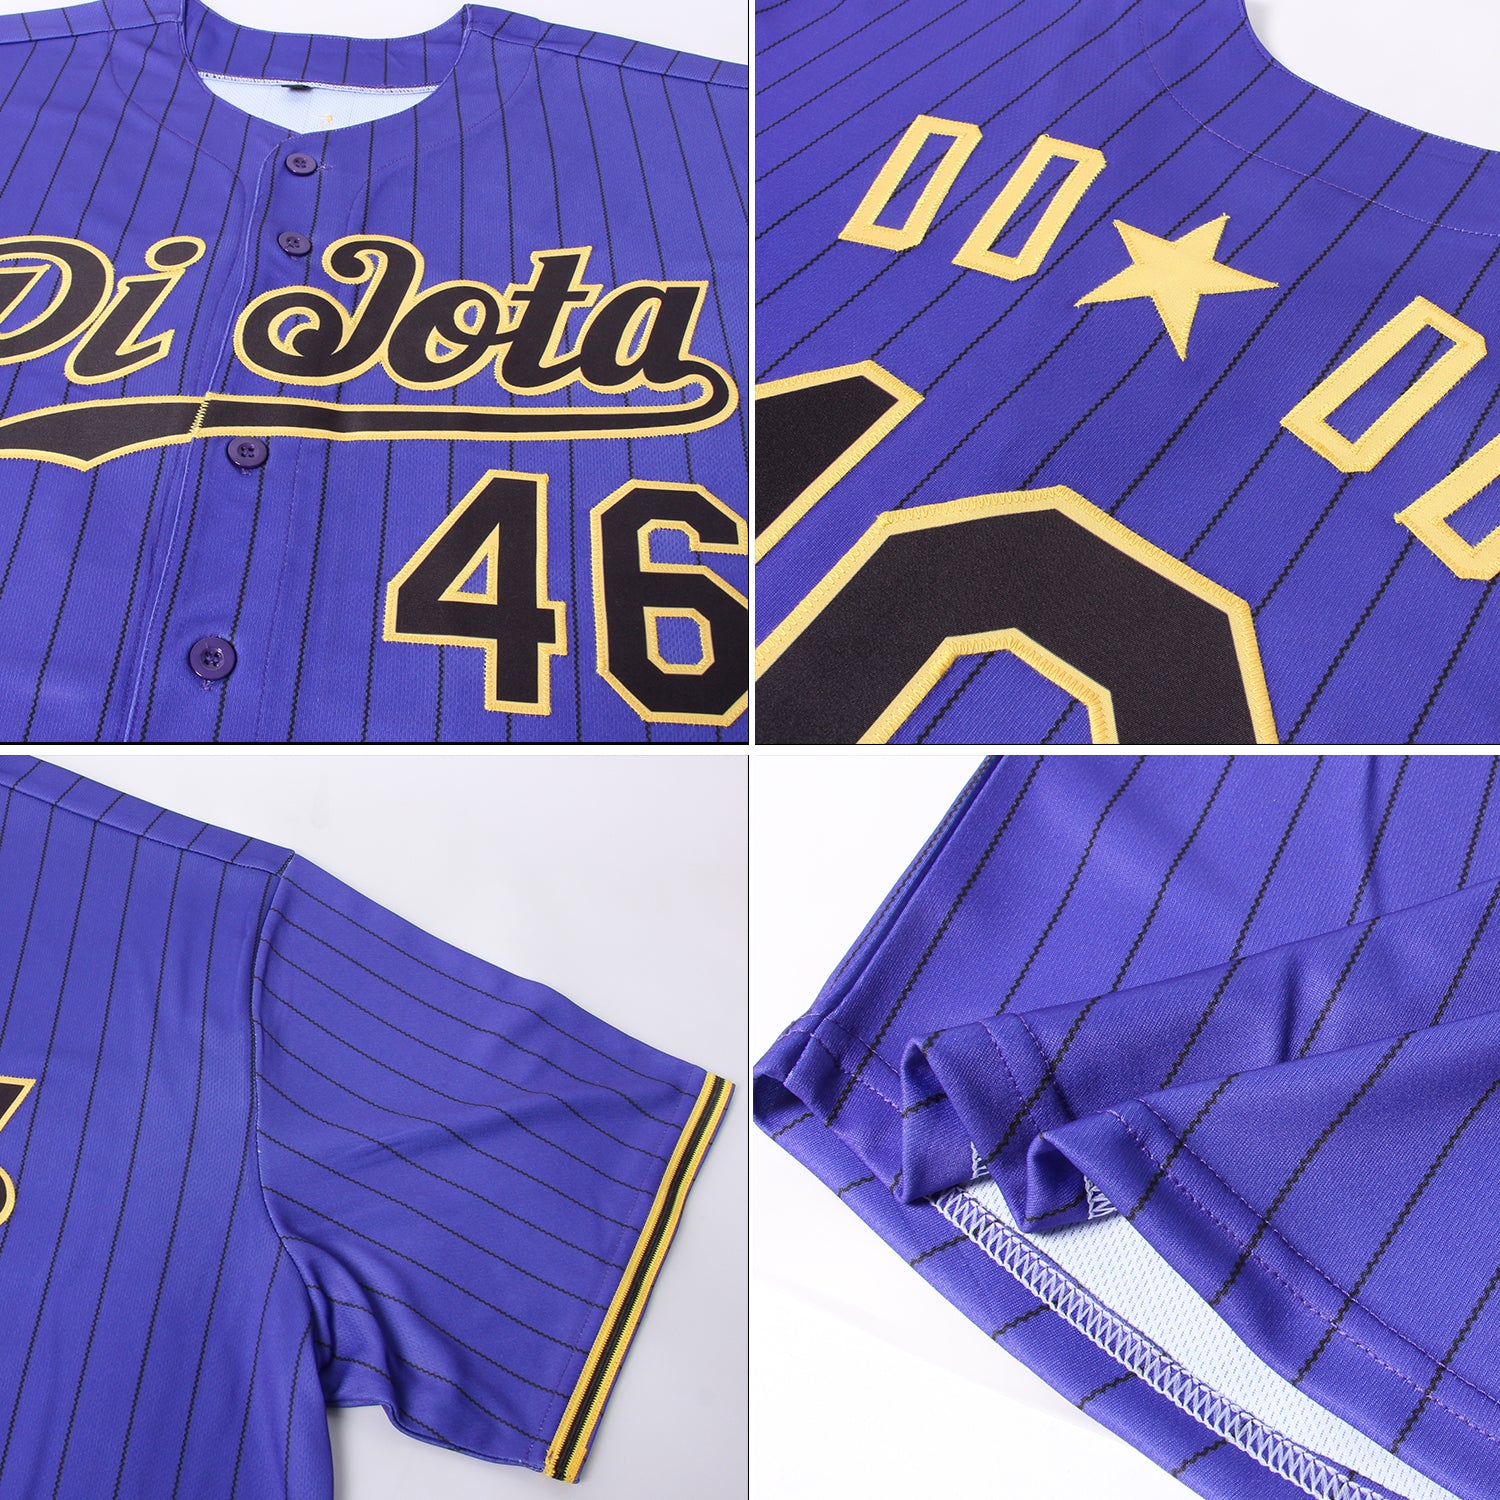 Custom Black Gold Pinstripe Black-Gold Authentic Baseball Jersey Discount